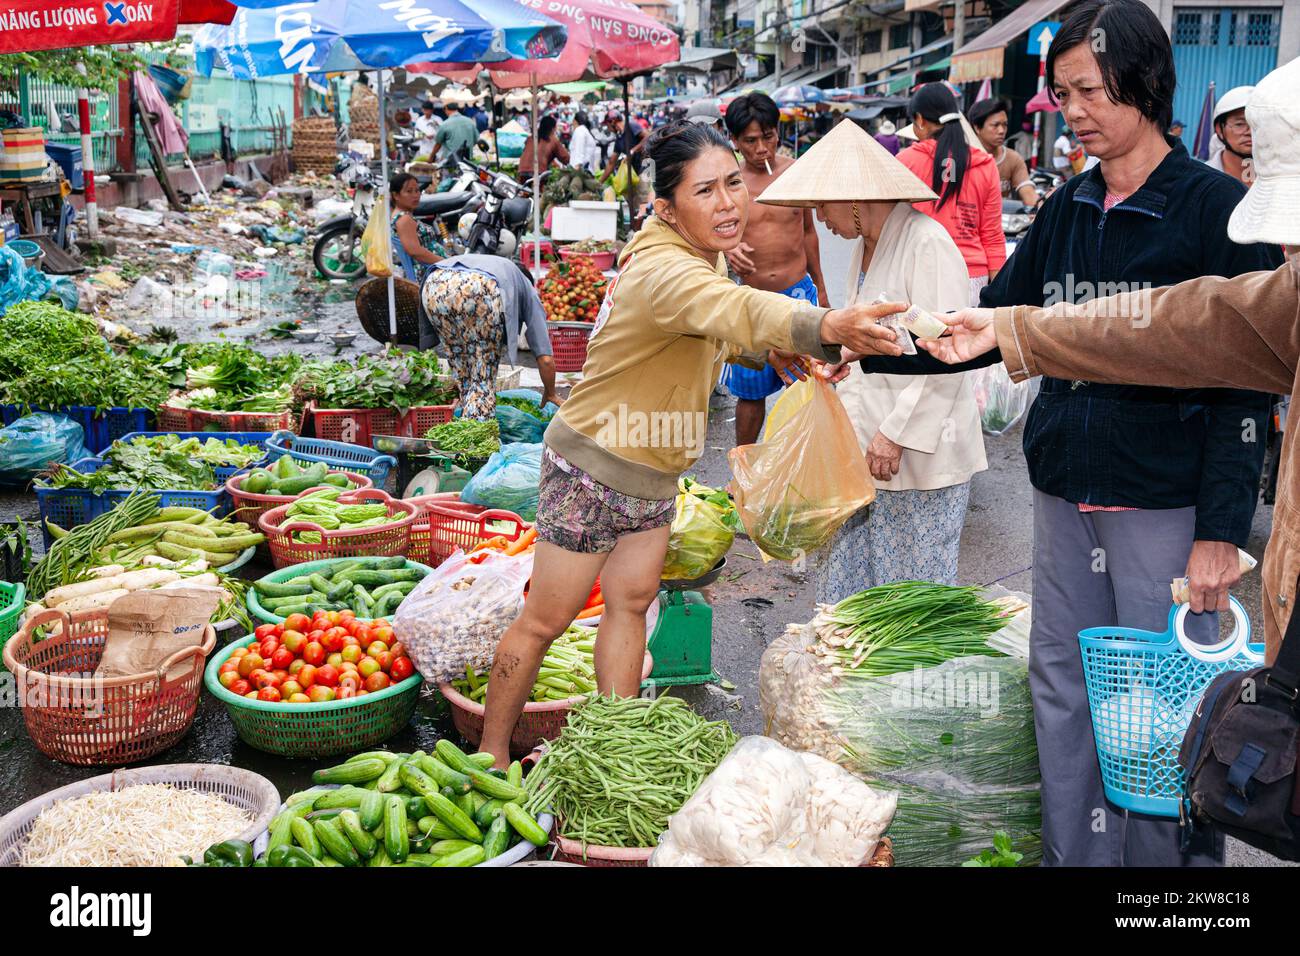 Vietnamese trader working in street market, central Ho Chi Minh City, Vietnam Stock Photo